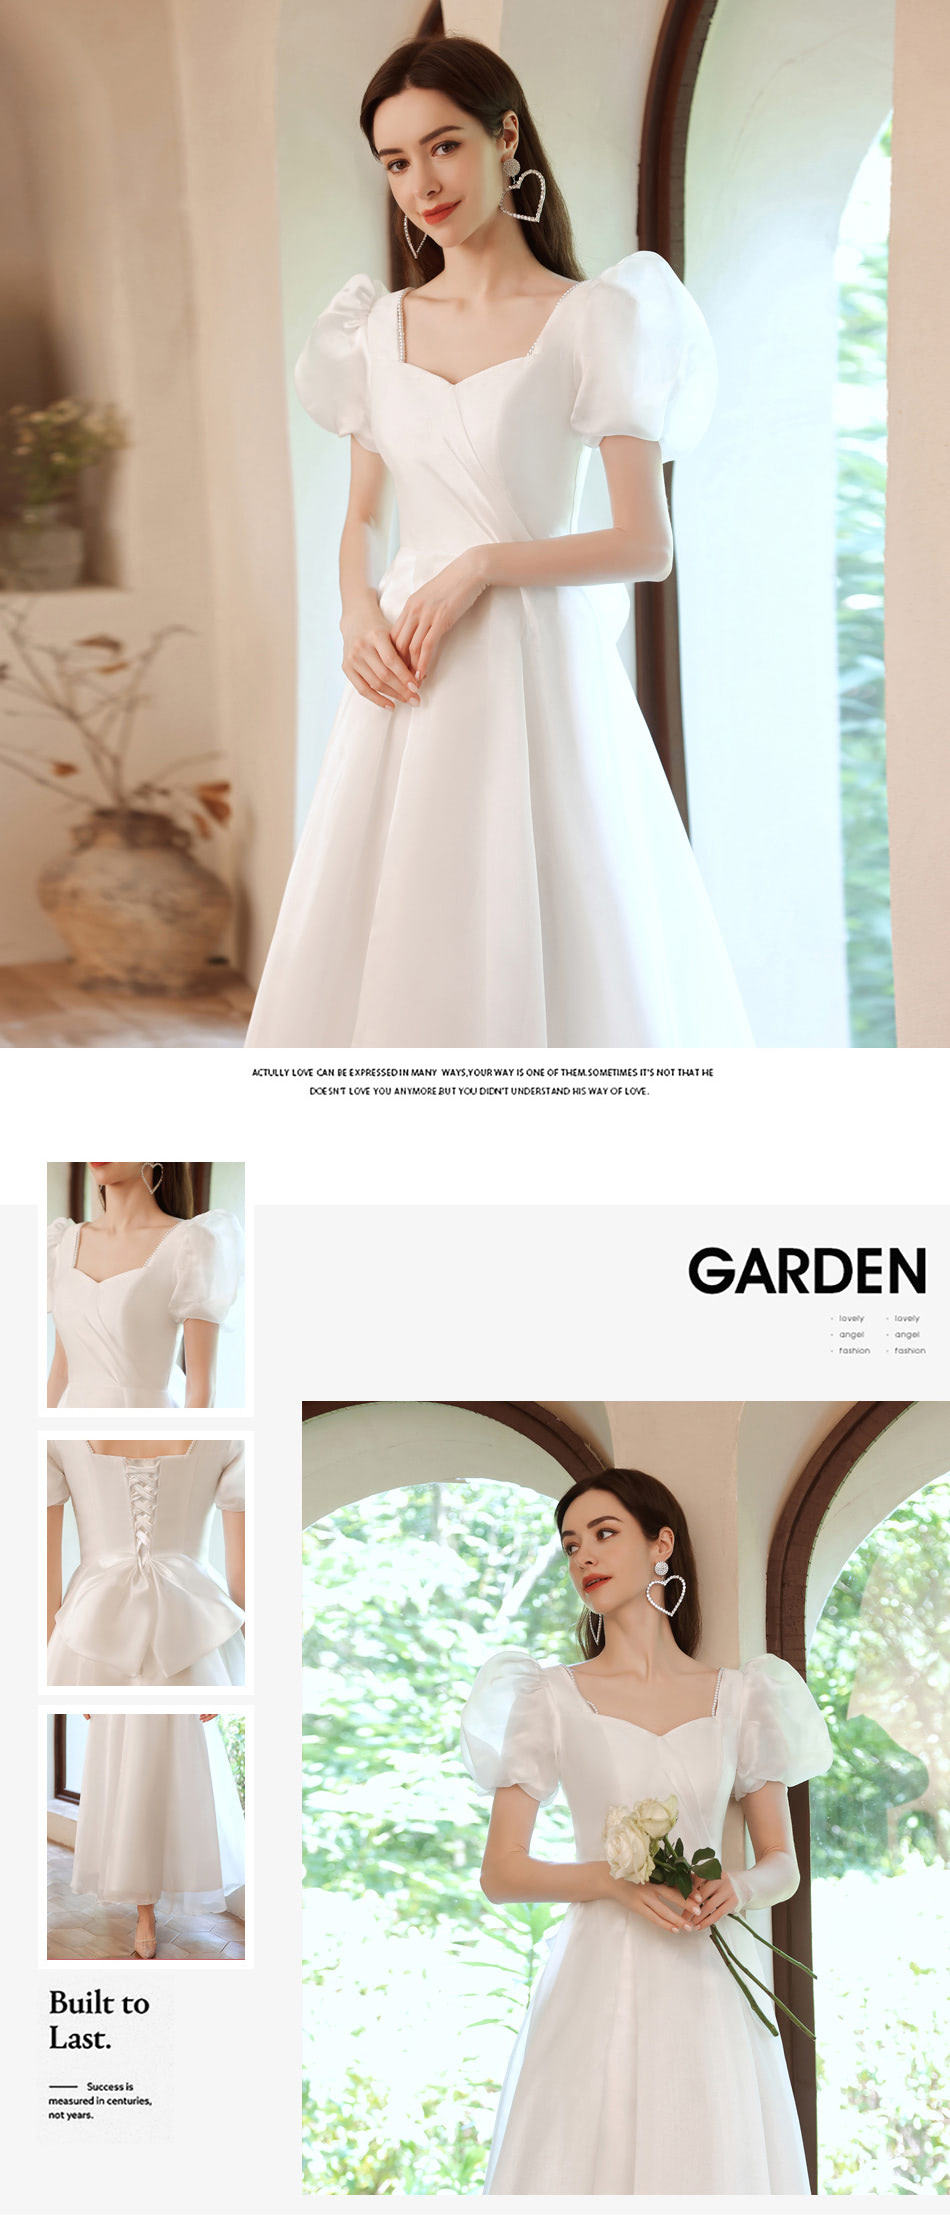 White-Short-Puff-Sleeve-Prom-Formal-Ball-Gown-Evening-Dress08.jpg